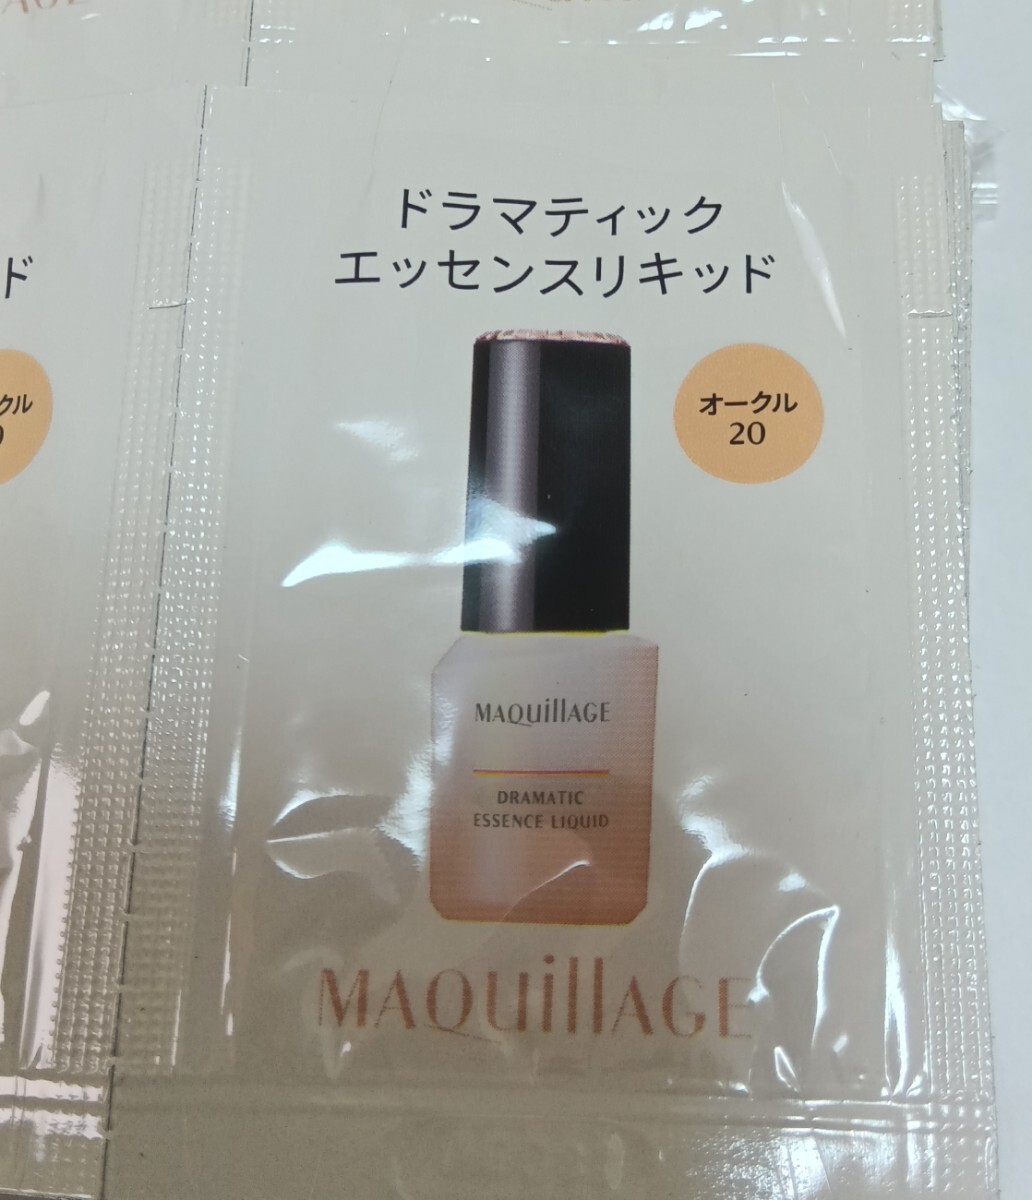  MAQuillAGE gong matic essence liquid oak ru10 oak ru20 liquid foundation Shiseido .. goods 